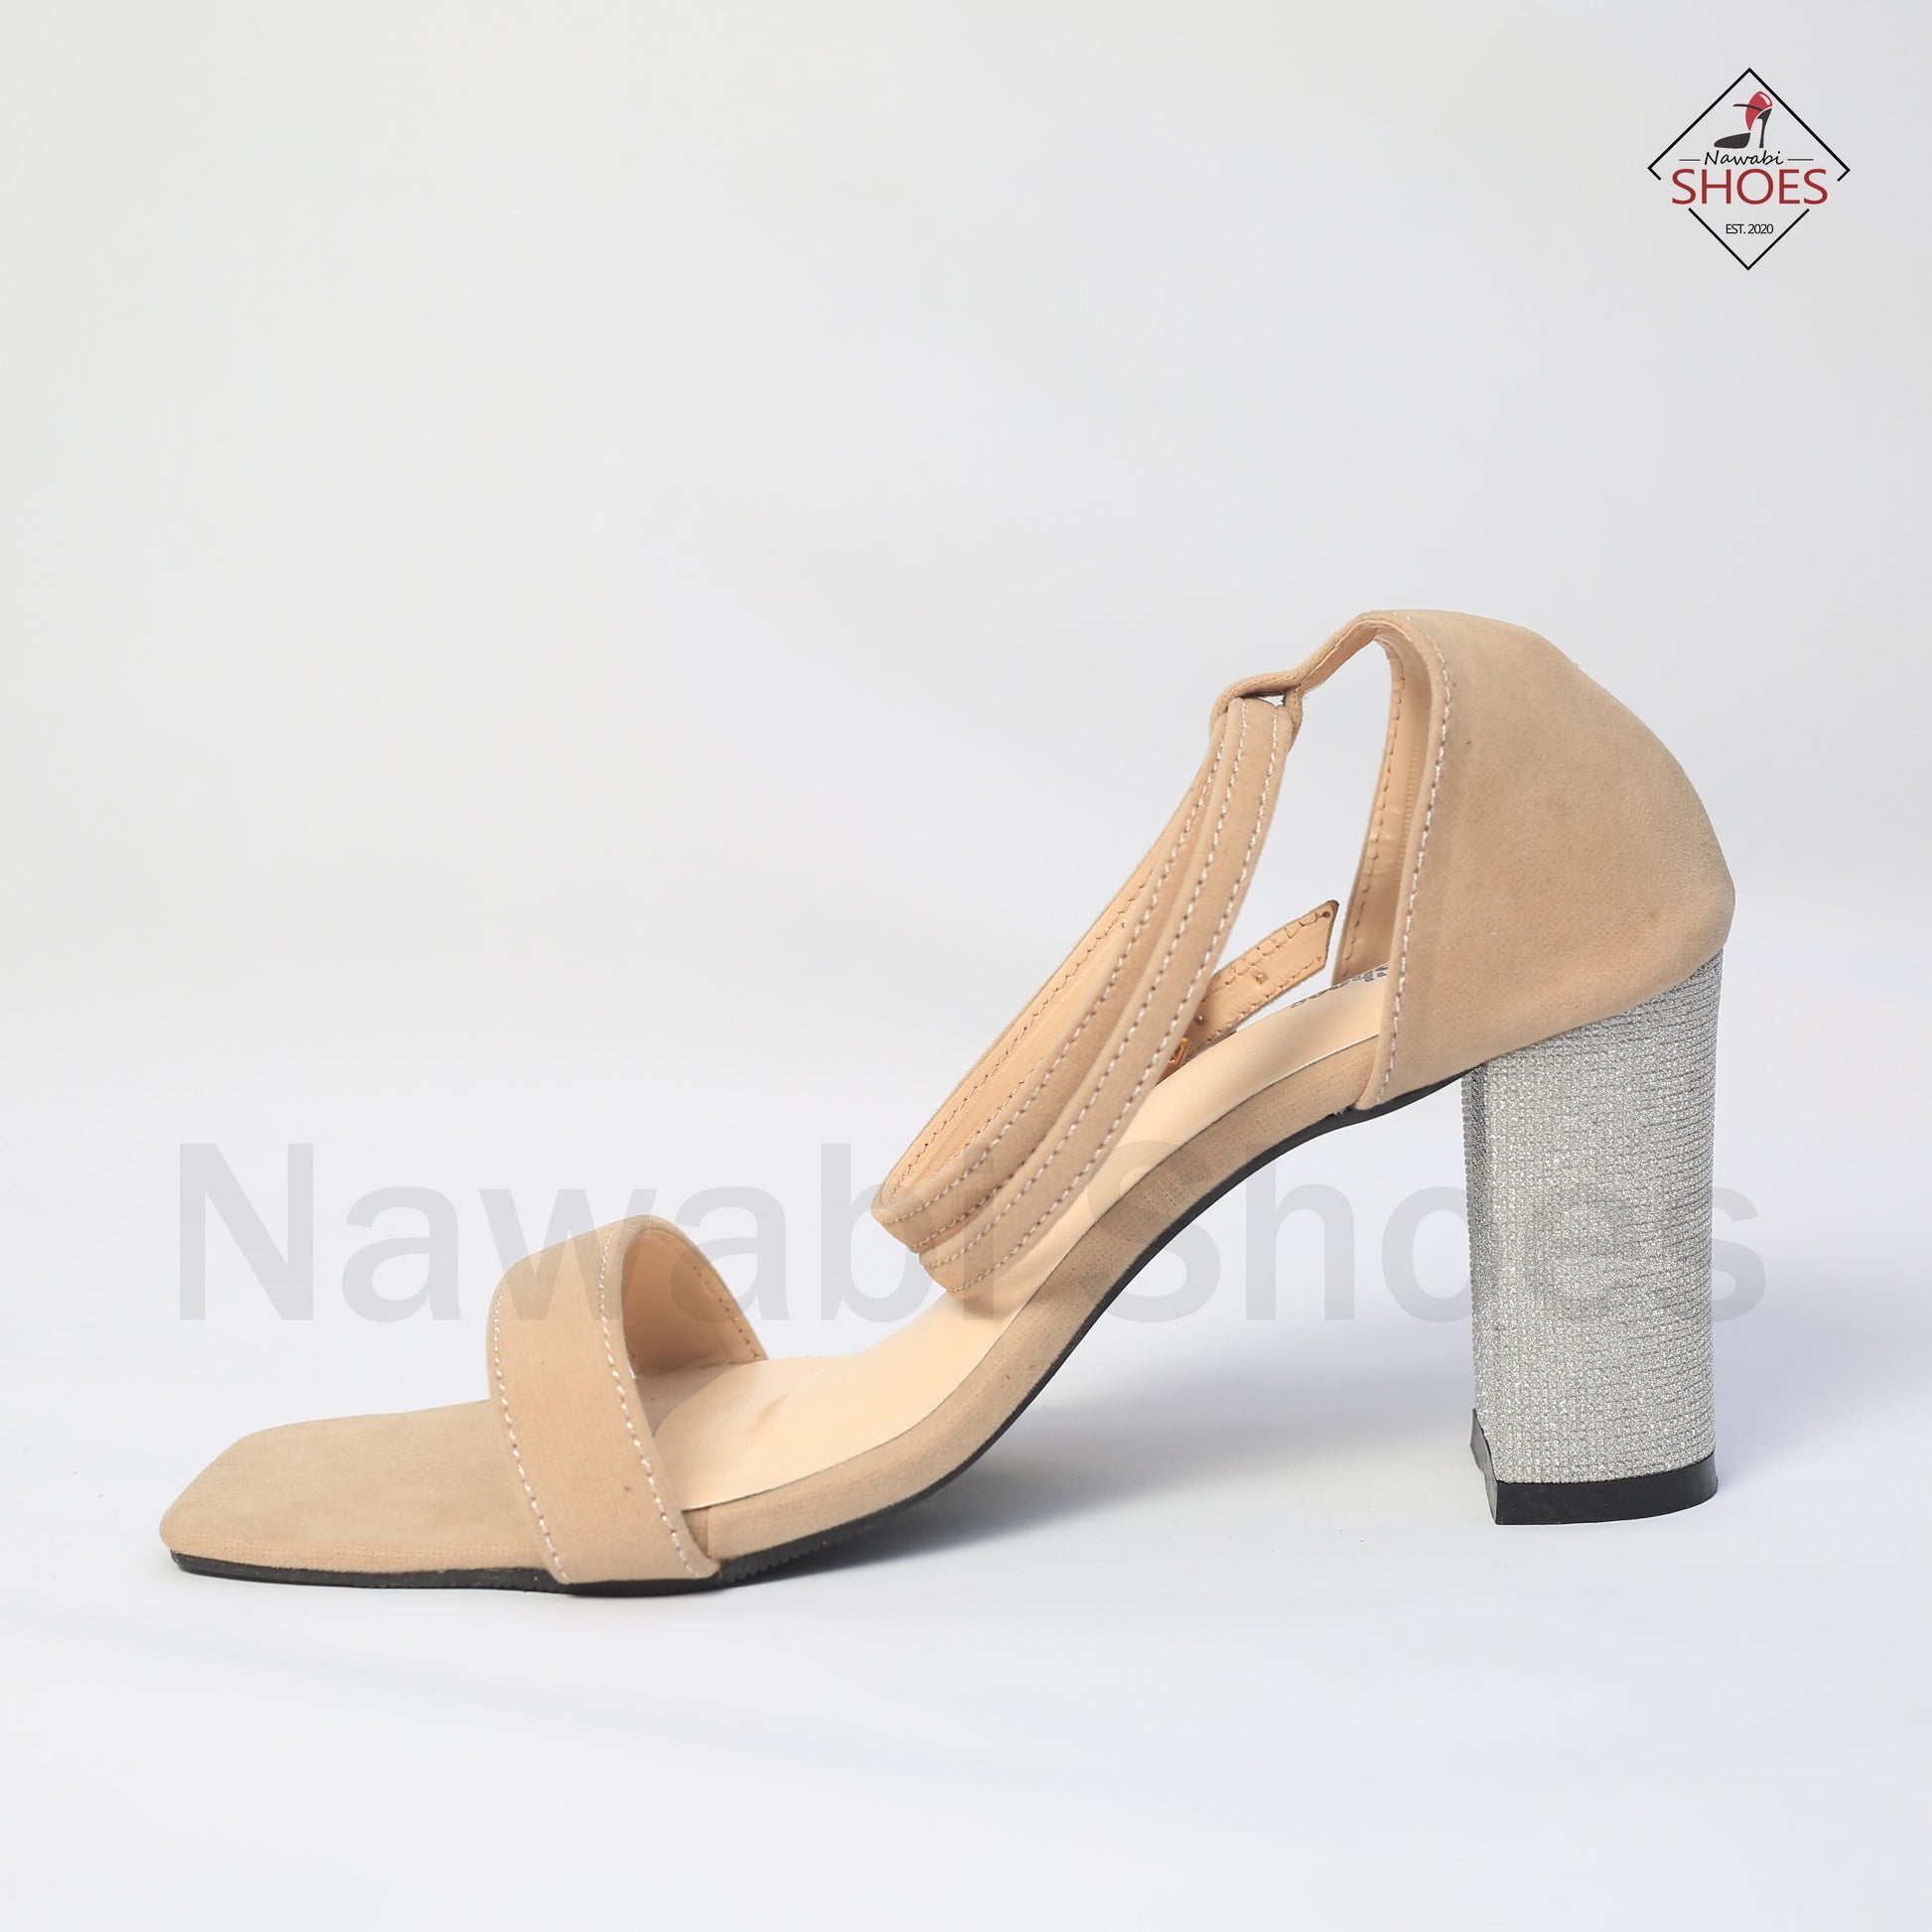 Cream Ankle Strap Block Heels Luxury Shoes-Nawabi Shoes BD